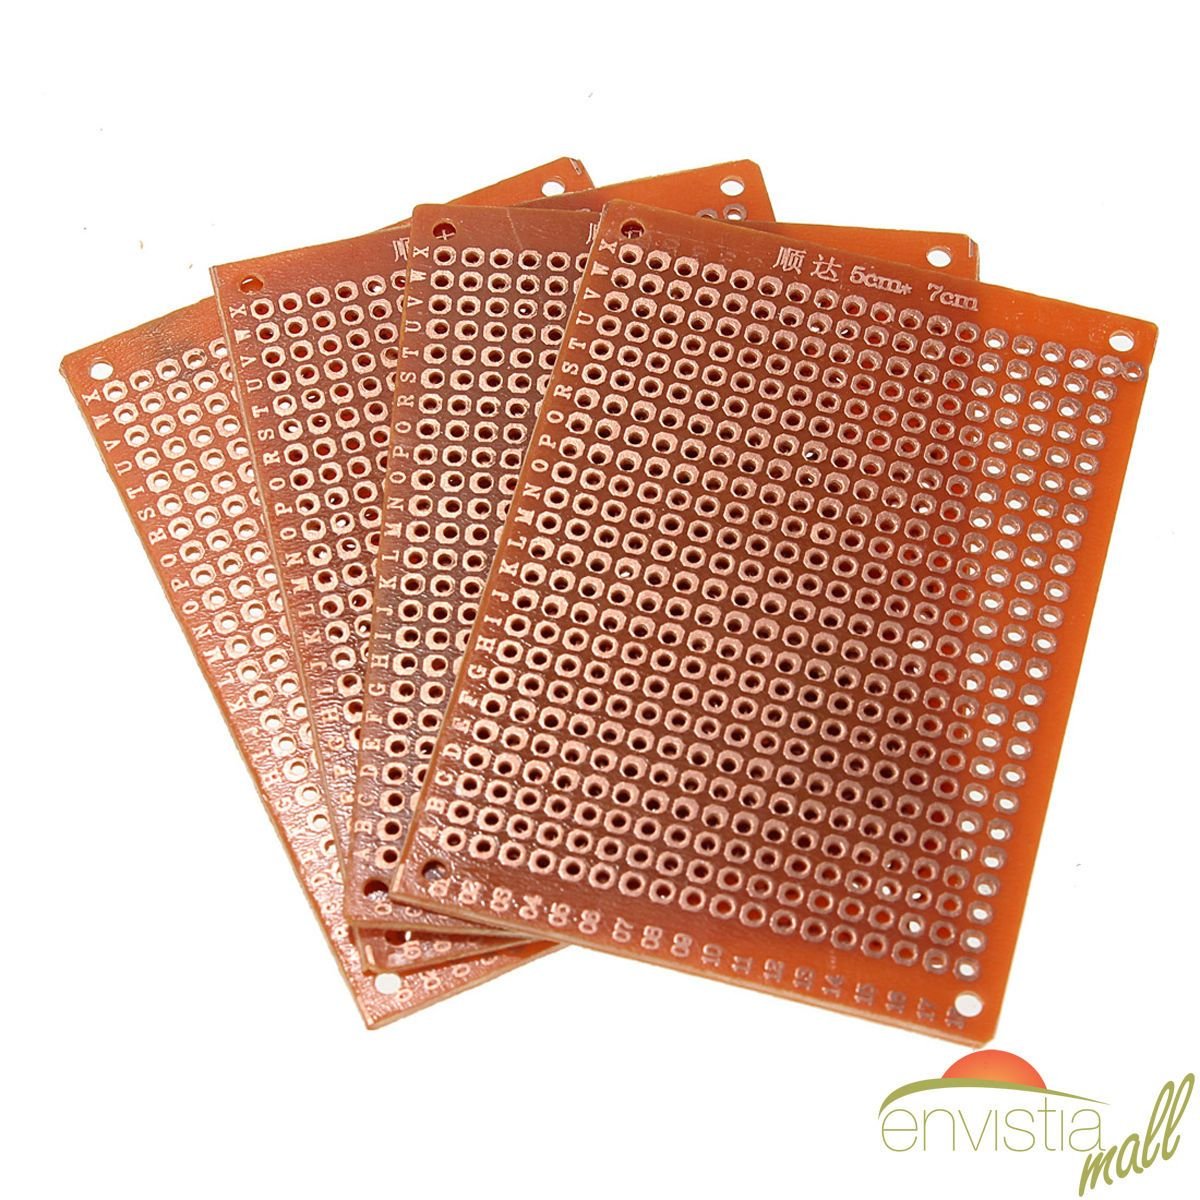 5x7cm DIY PCB Prototyping Perf Circuit Boards Breadboards - 10 Piece Set